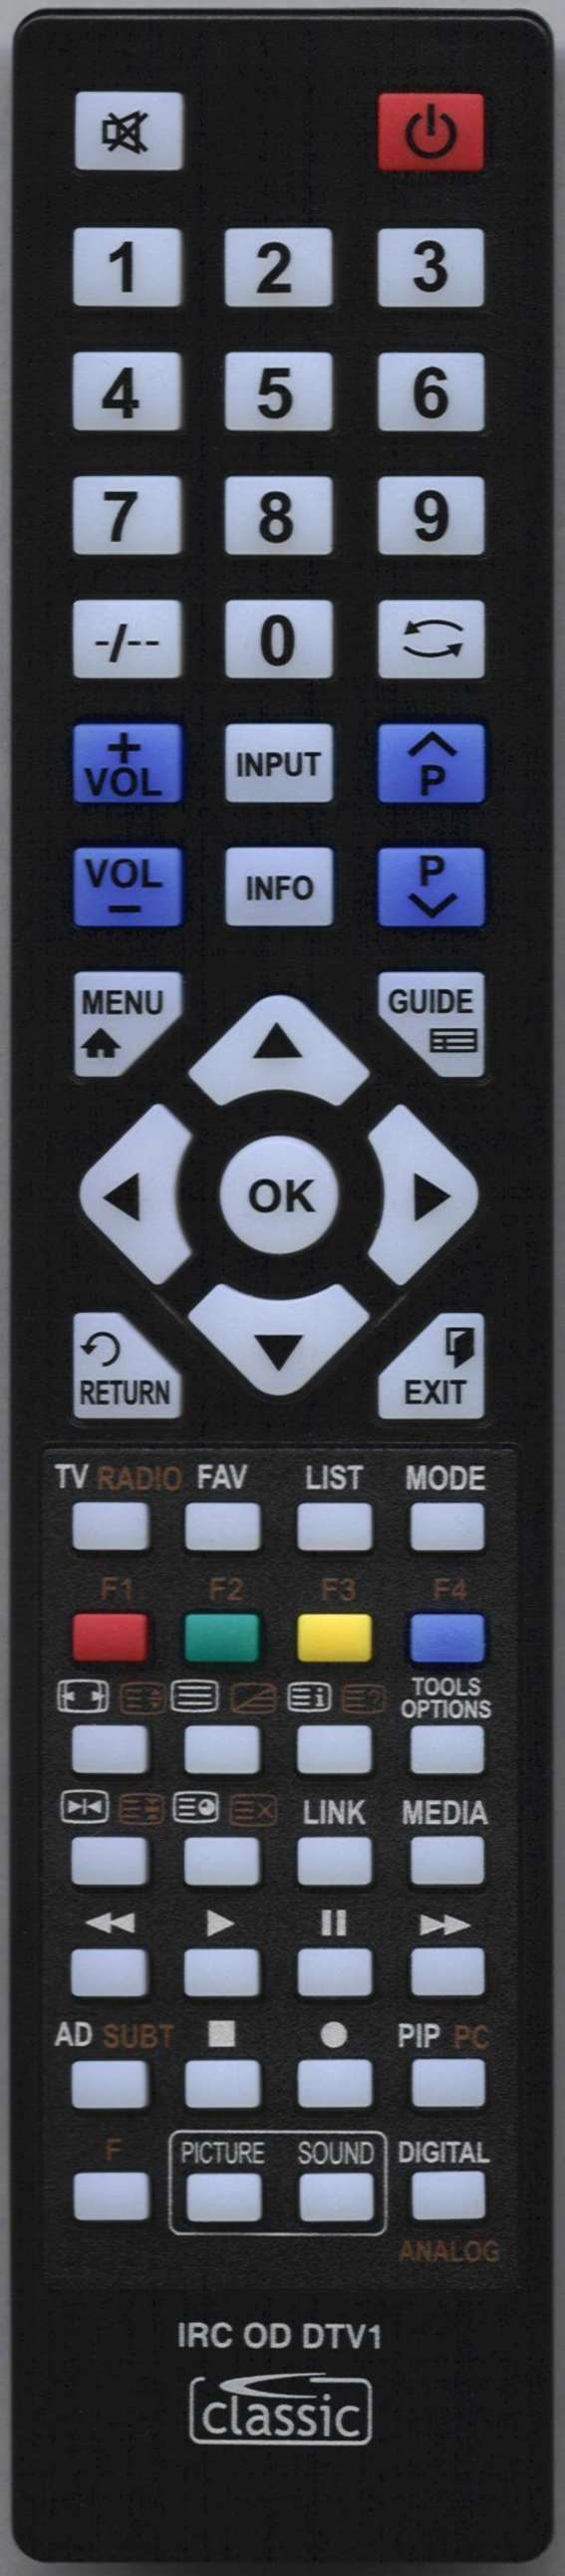 TCL RC1994925/01 Remote Control Alternative